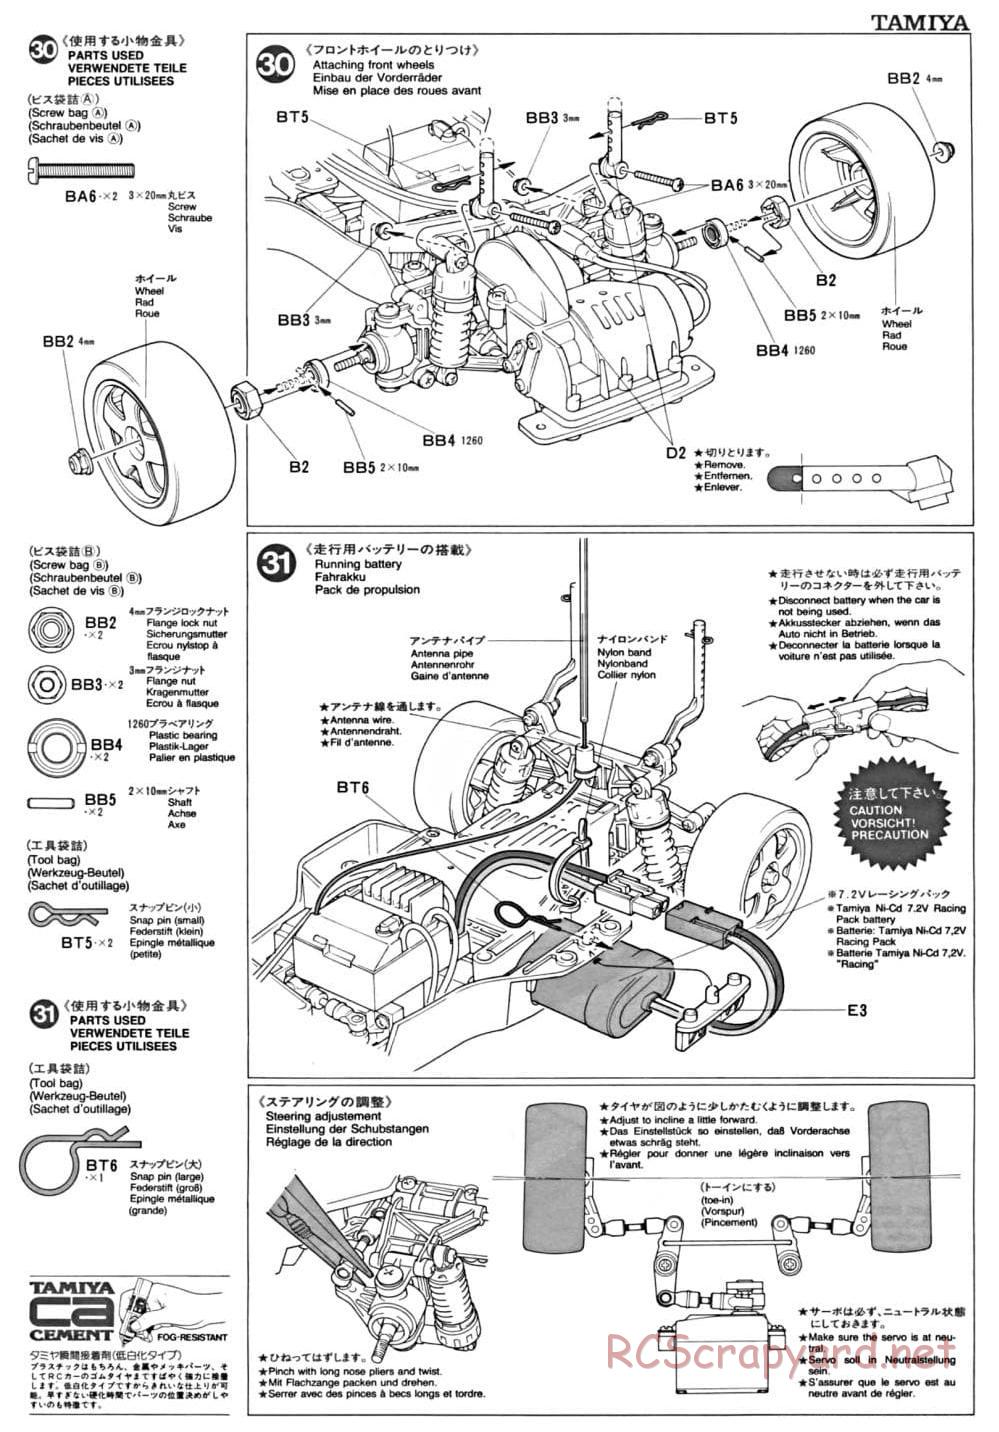 Tamiya - FF-01 Chassis - Manual - Page 15